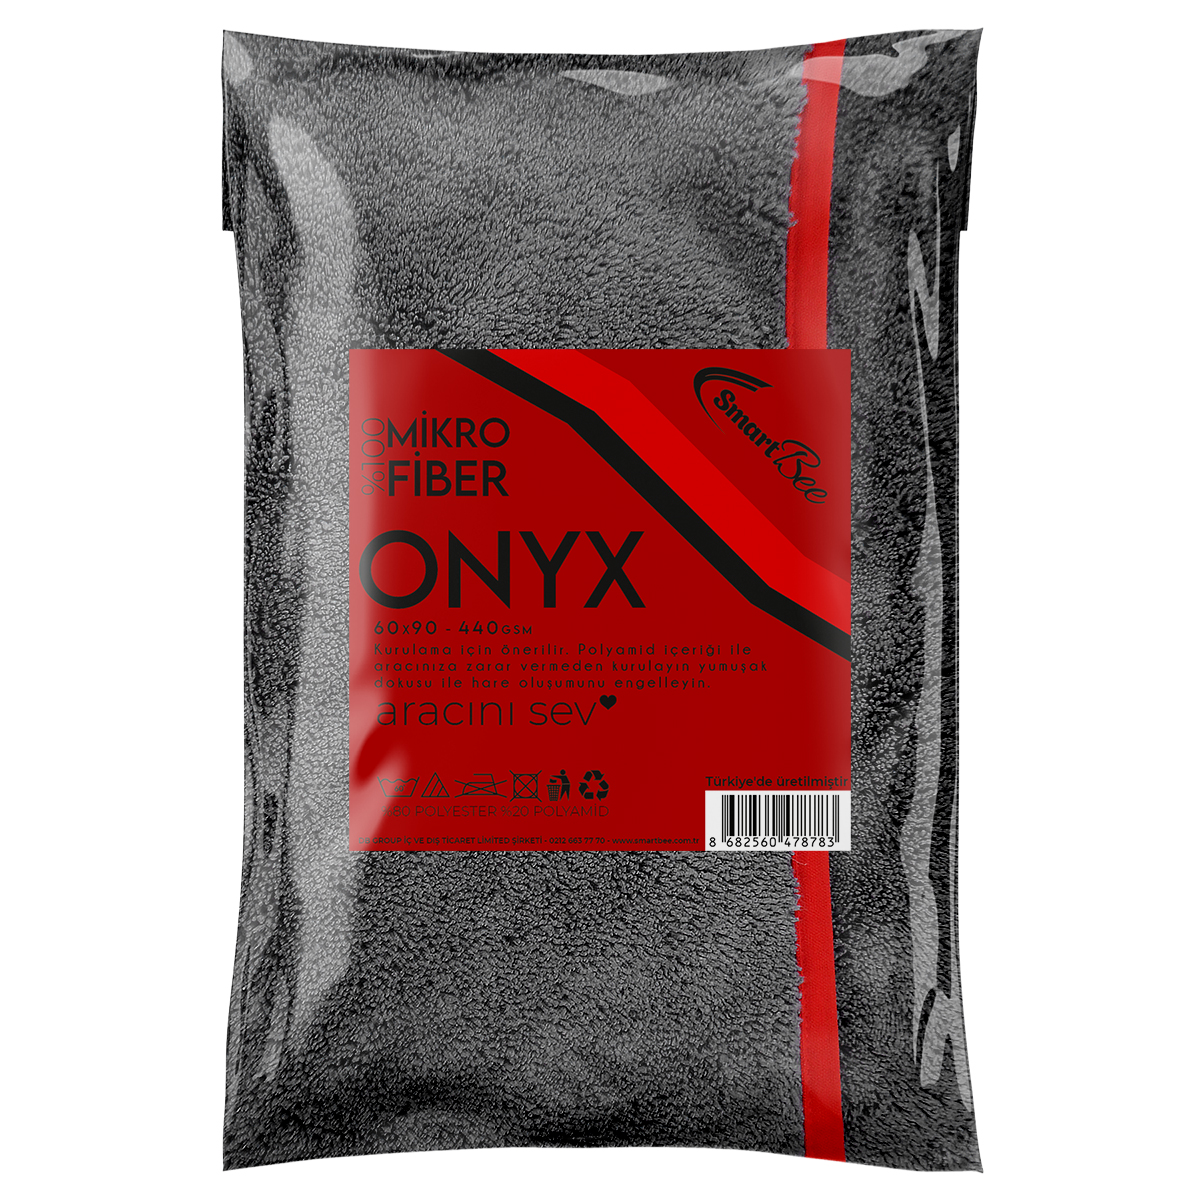 Onyx Mikrofiber Antrasit Oto Kurulama Havlusu 60x90 cm 440gsm